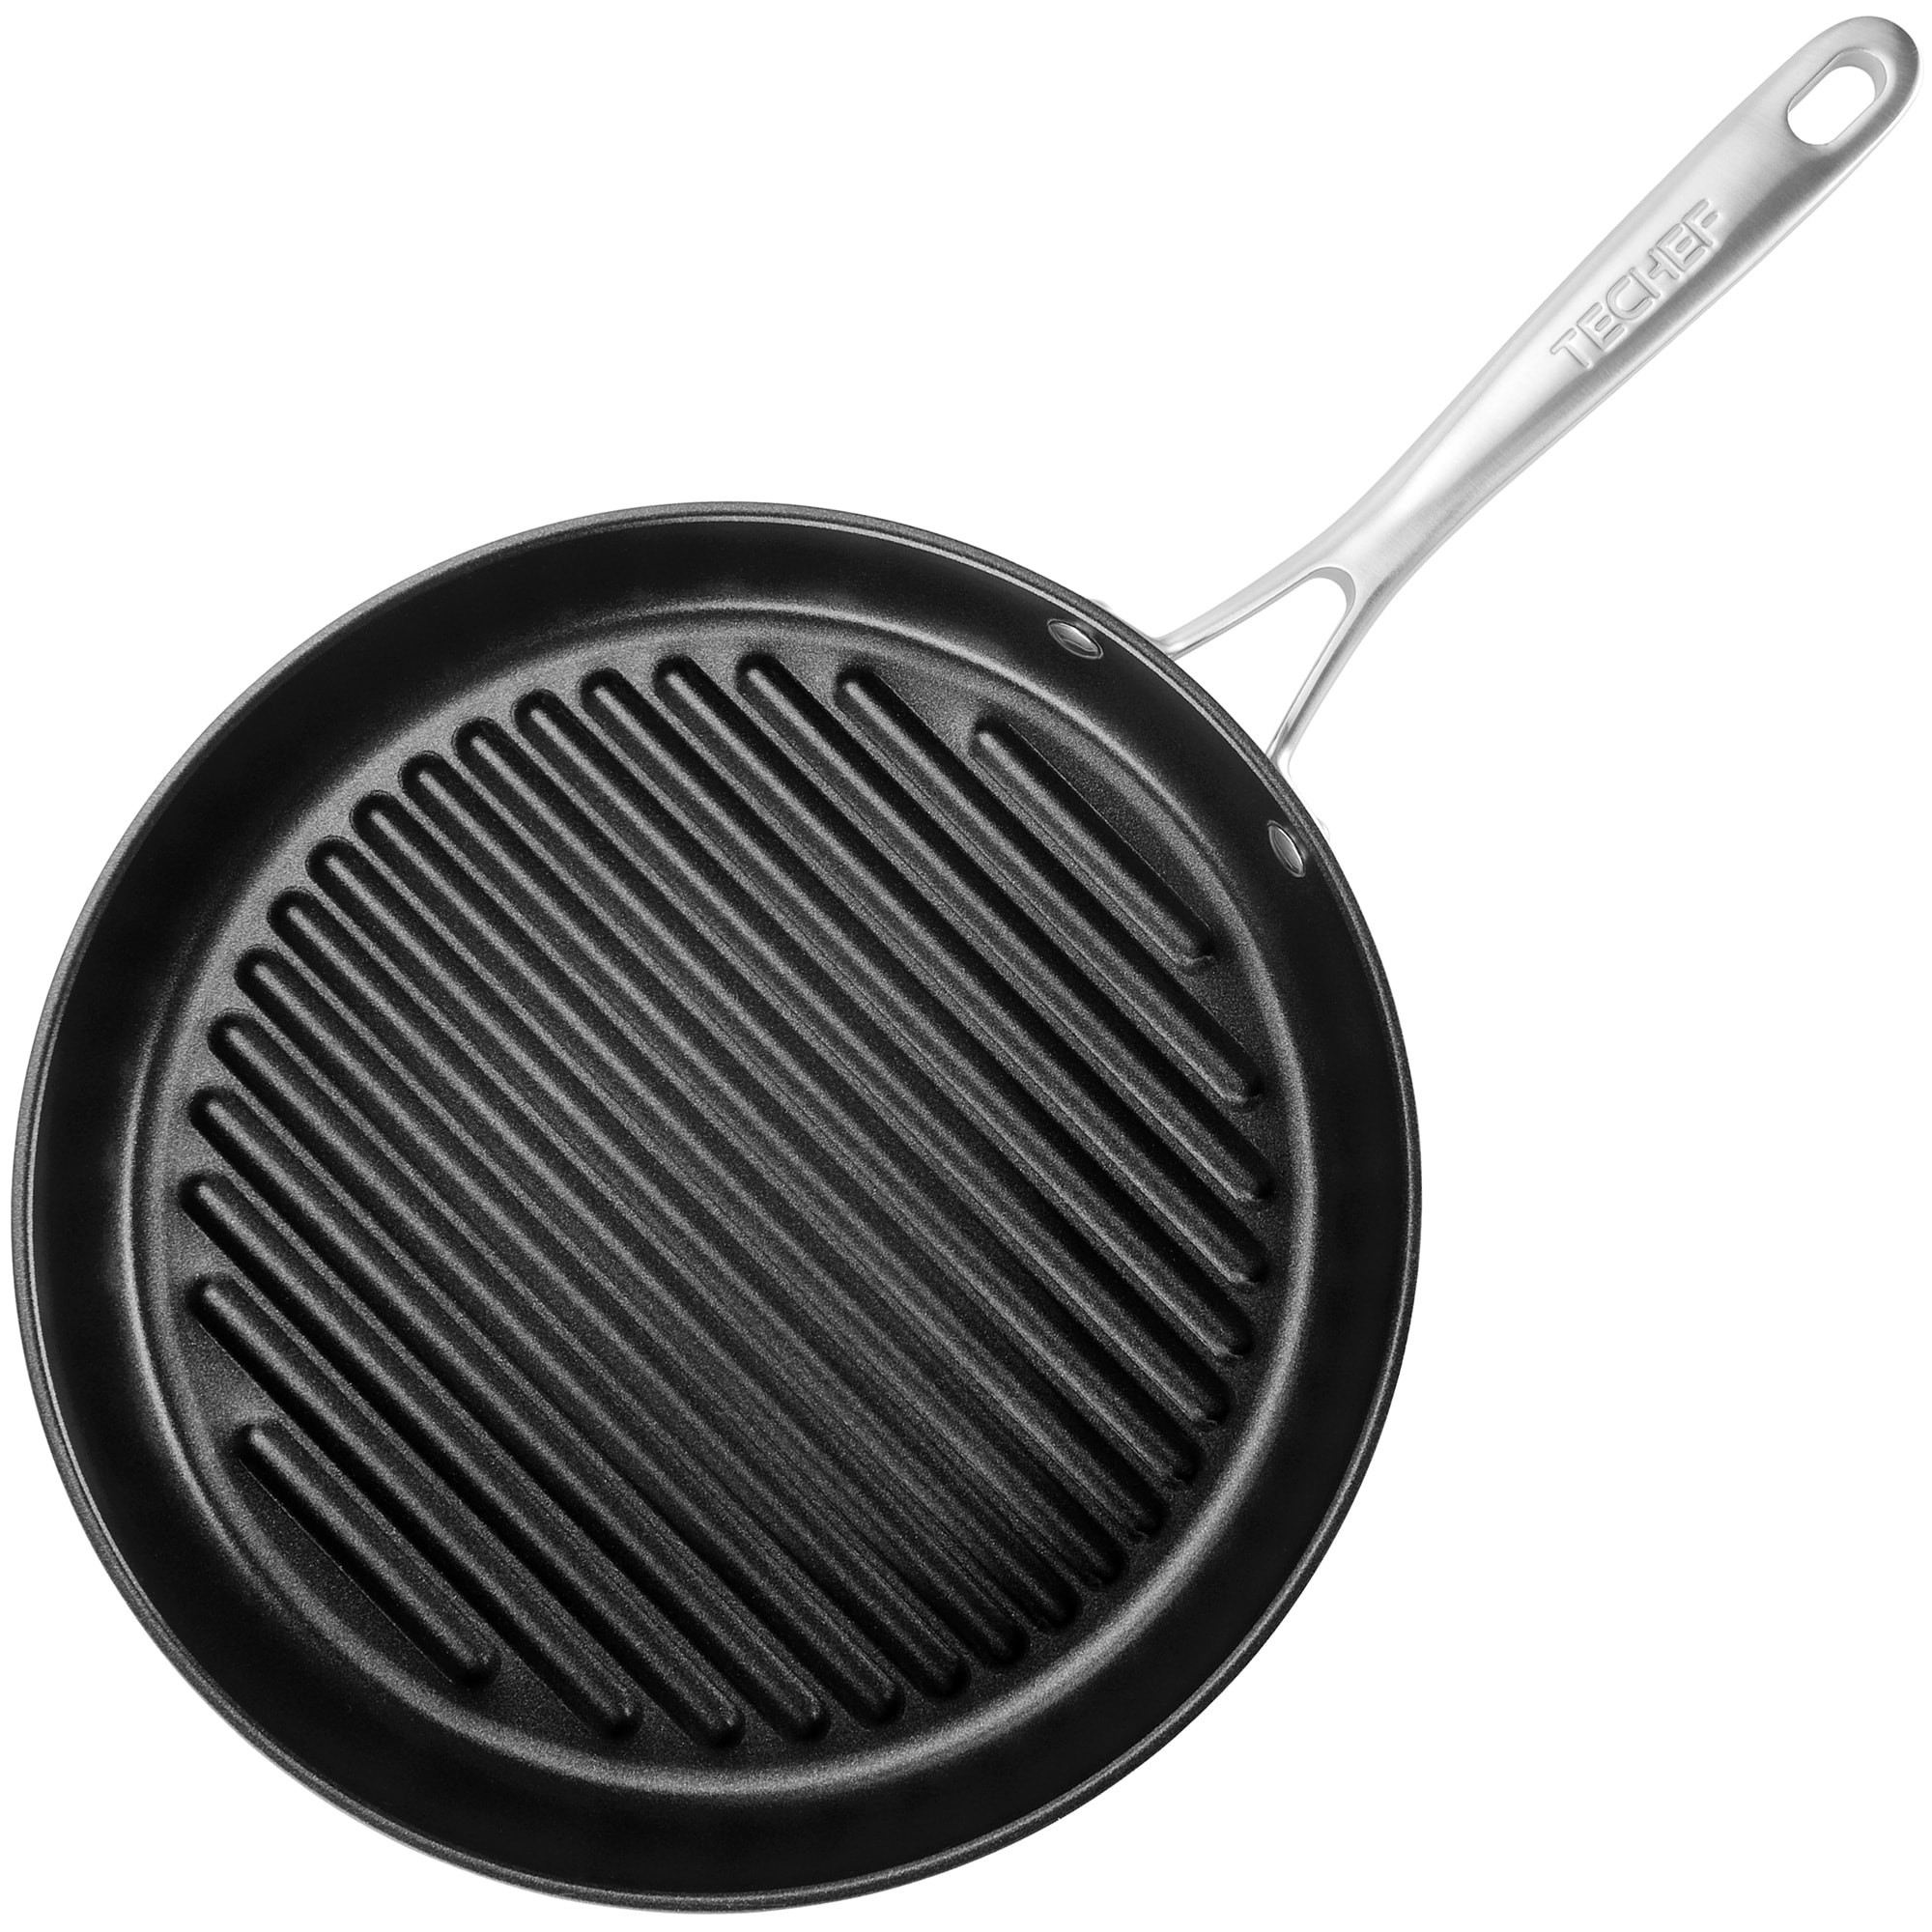 Ninja Foodi NeverStick Premium Hard-Anodized 12-in. Round Griddle Pan